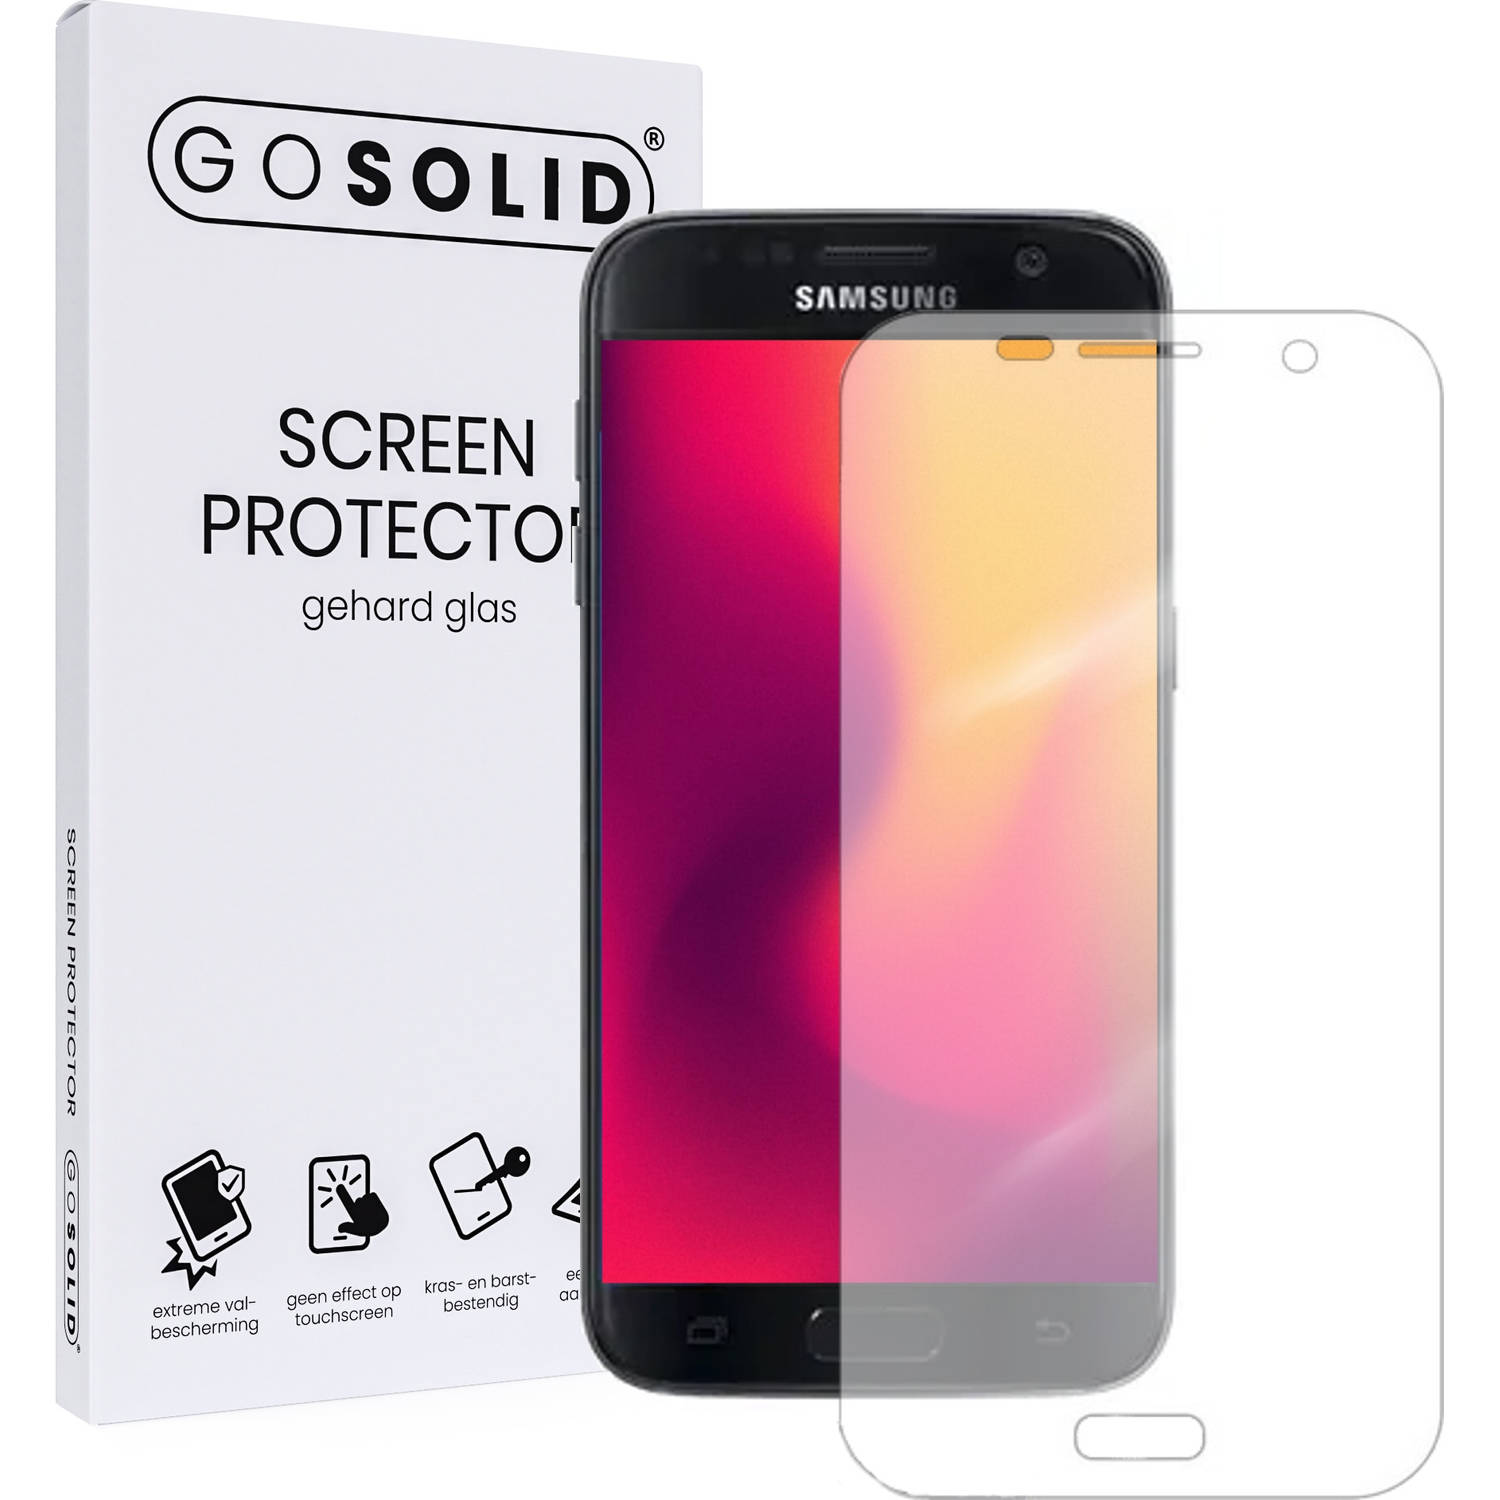 GO SOLID! Samsung Galaxy S6 screenprotector gehard glas